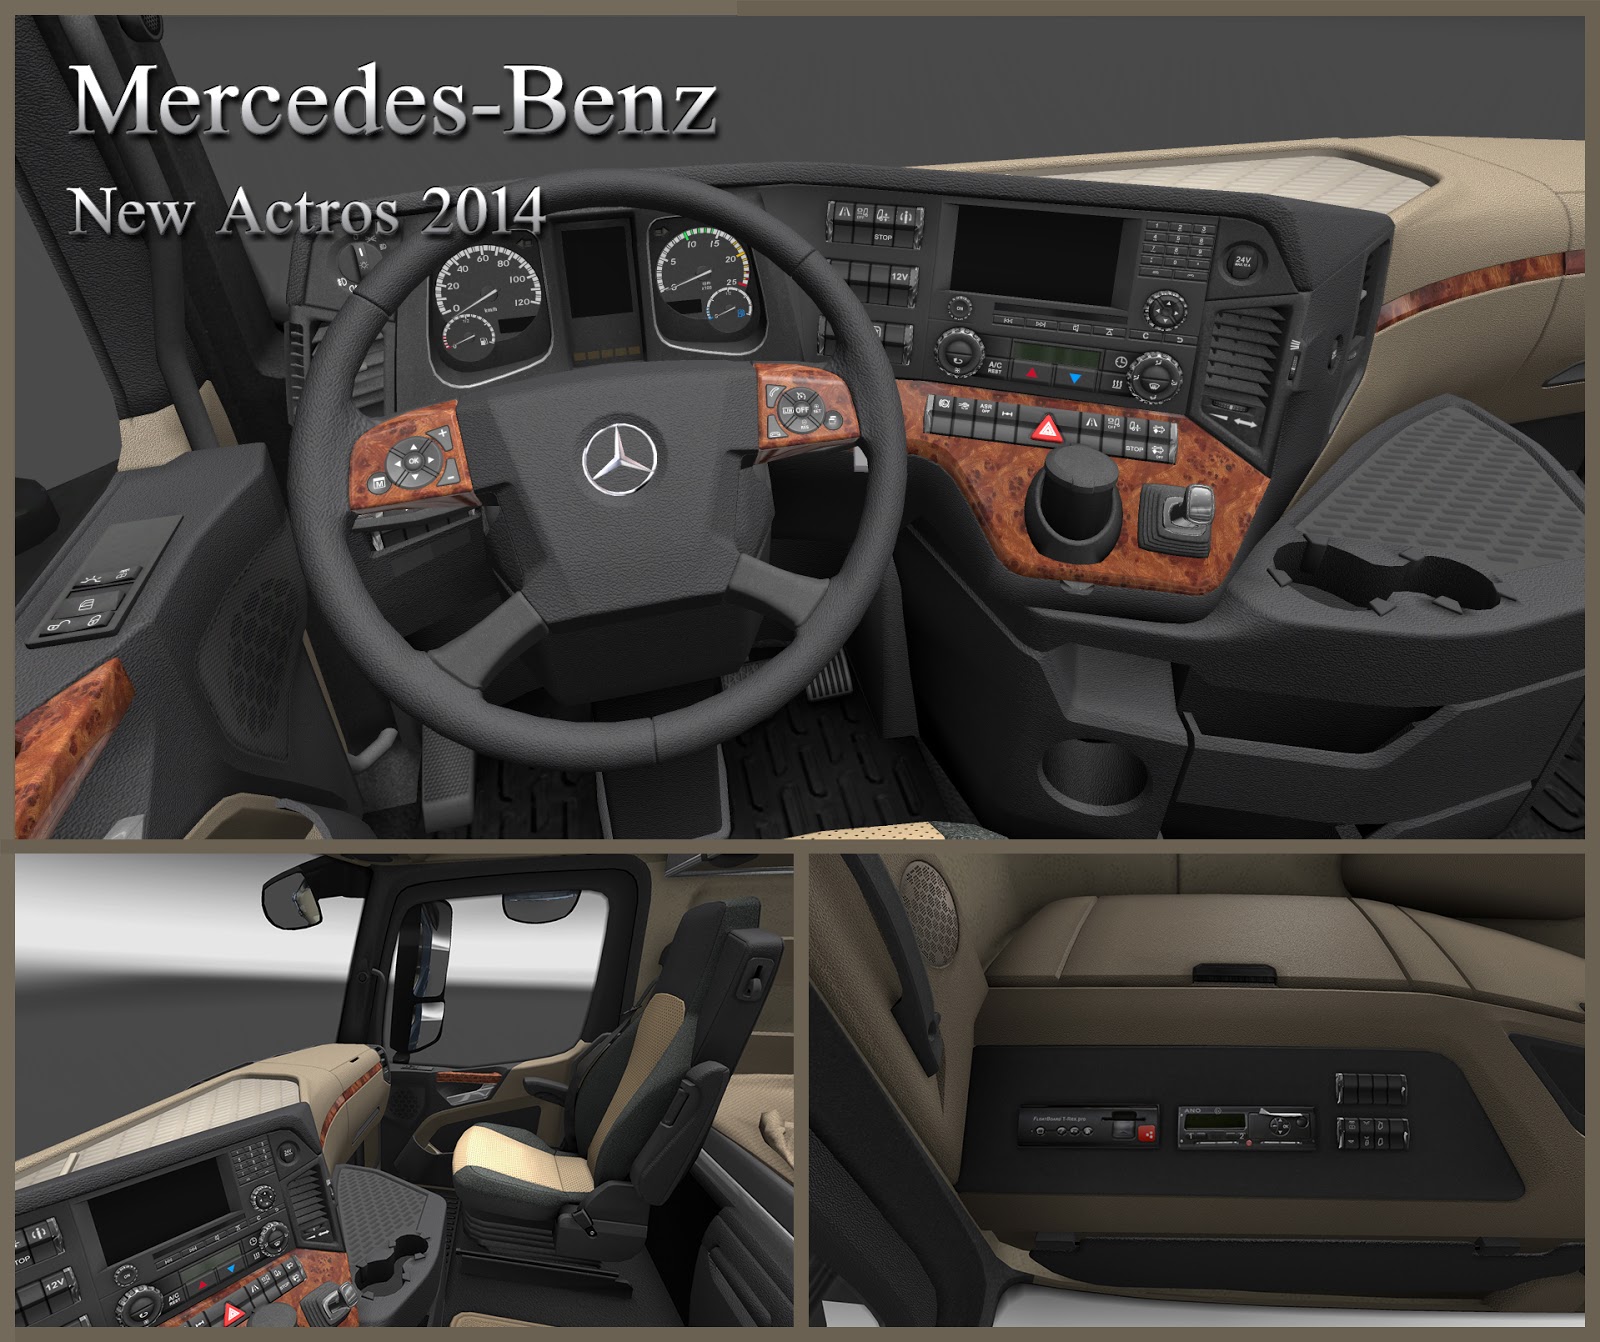 MB-New-Actros-2014-Interior2.jpg